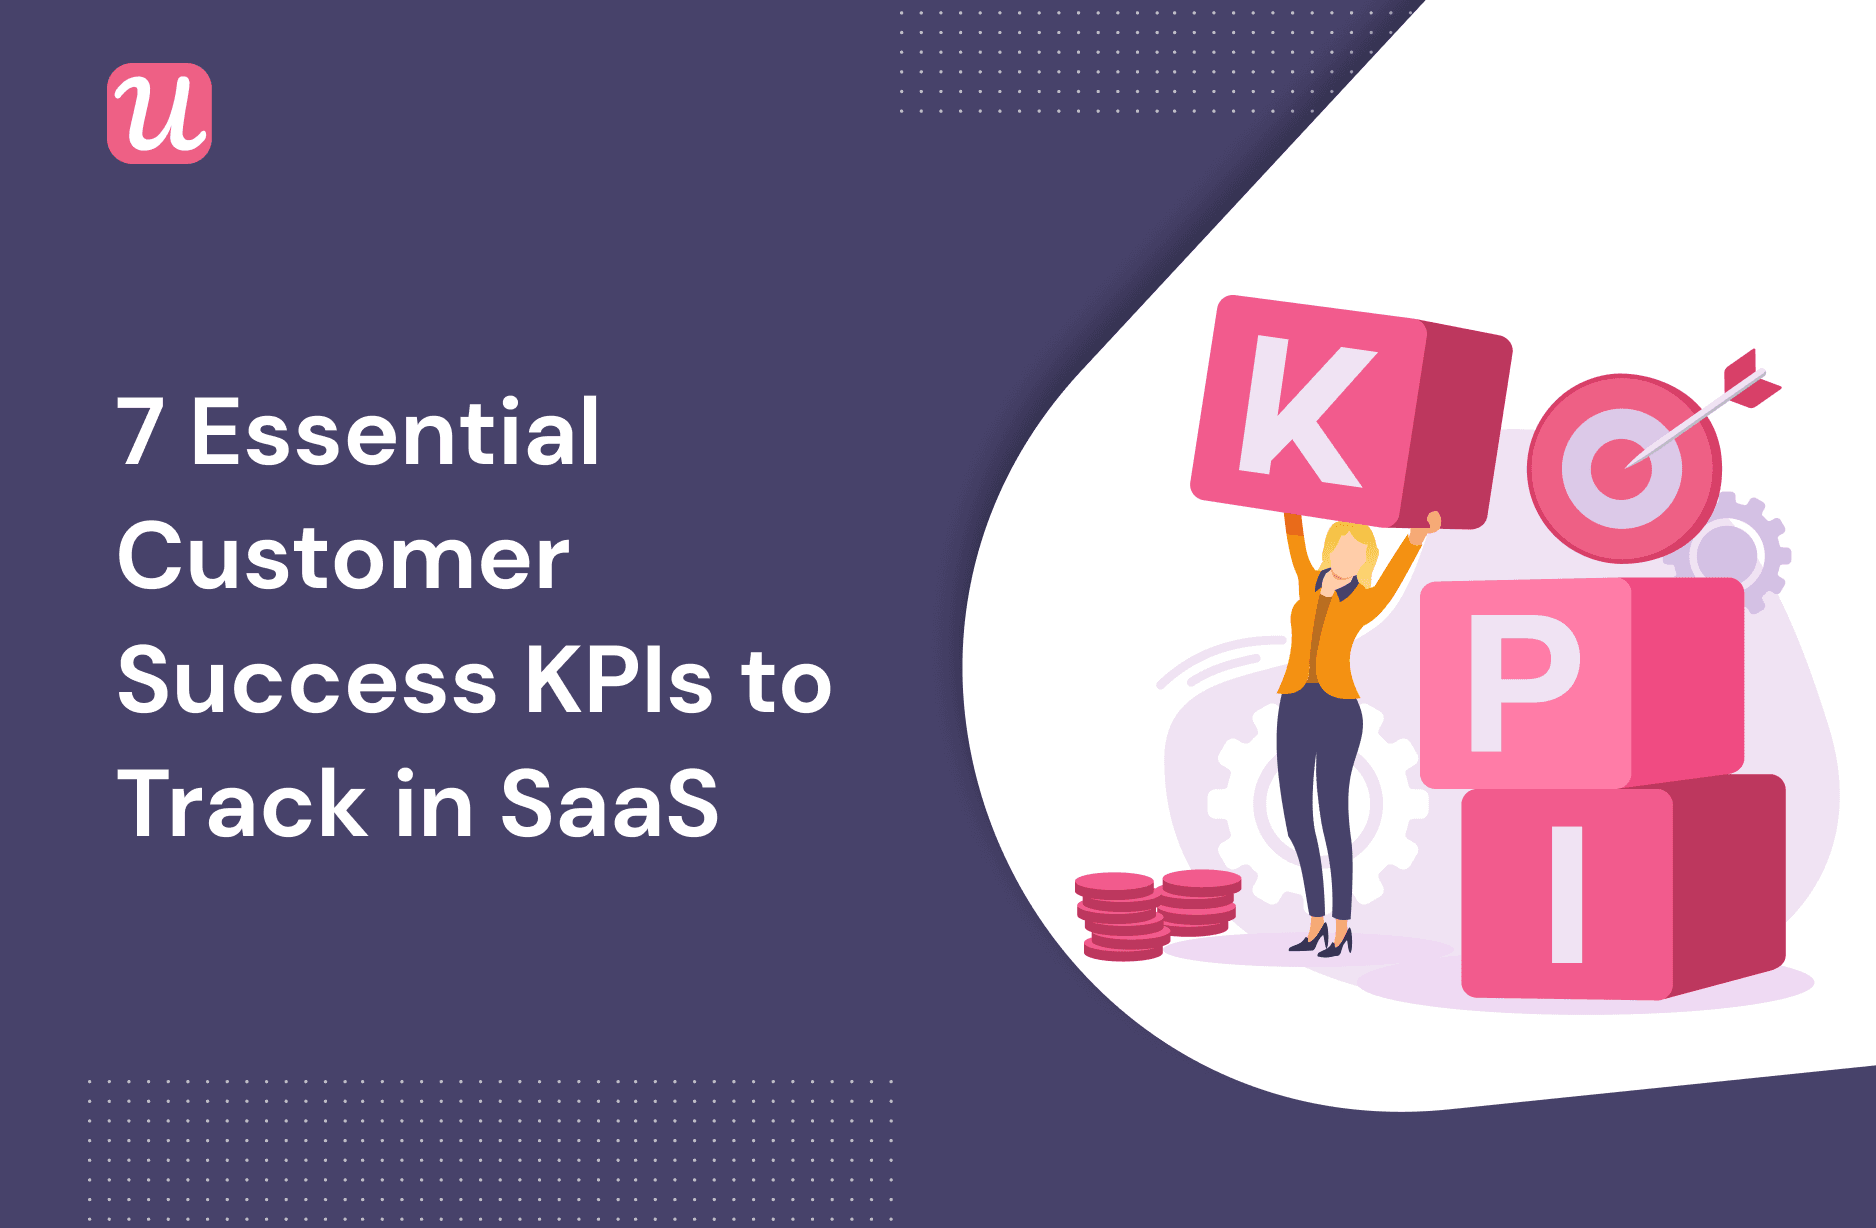 7 Essential Customer Success KPIs to Track in SaaS